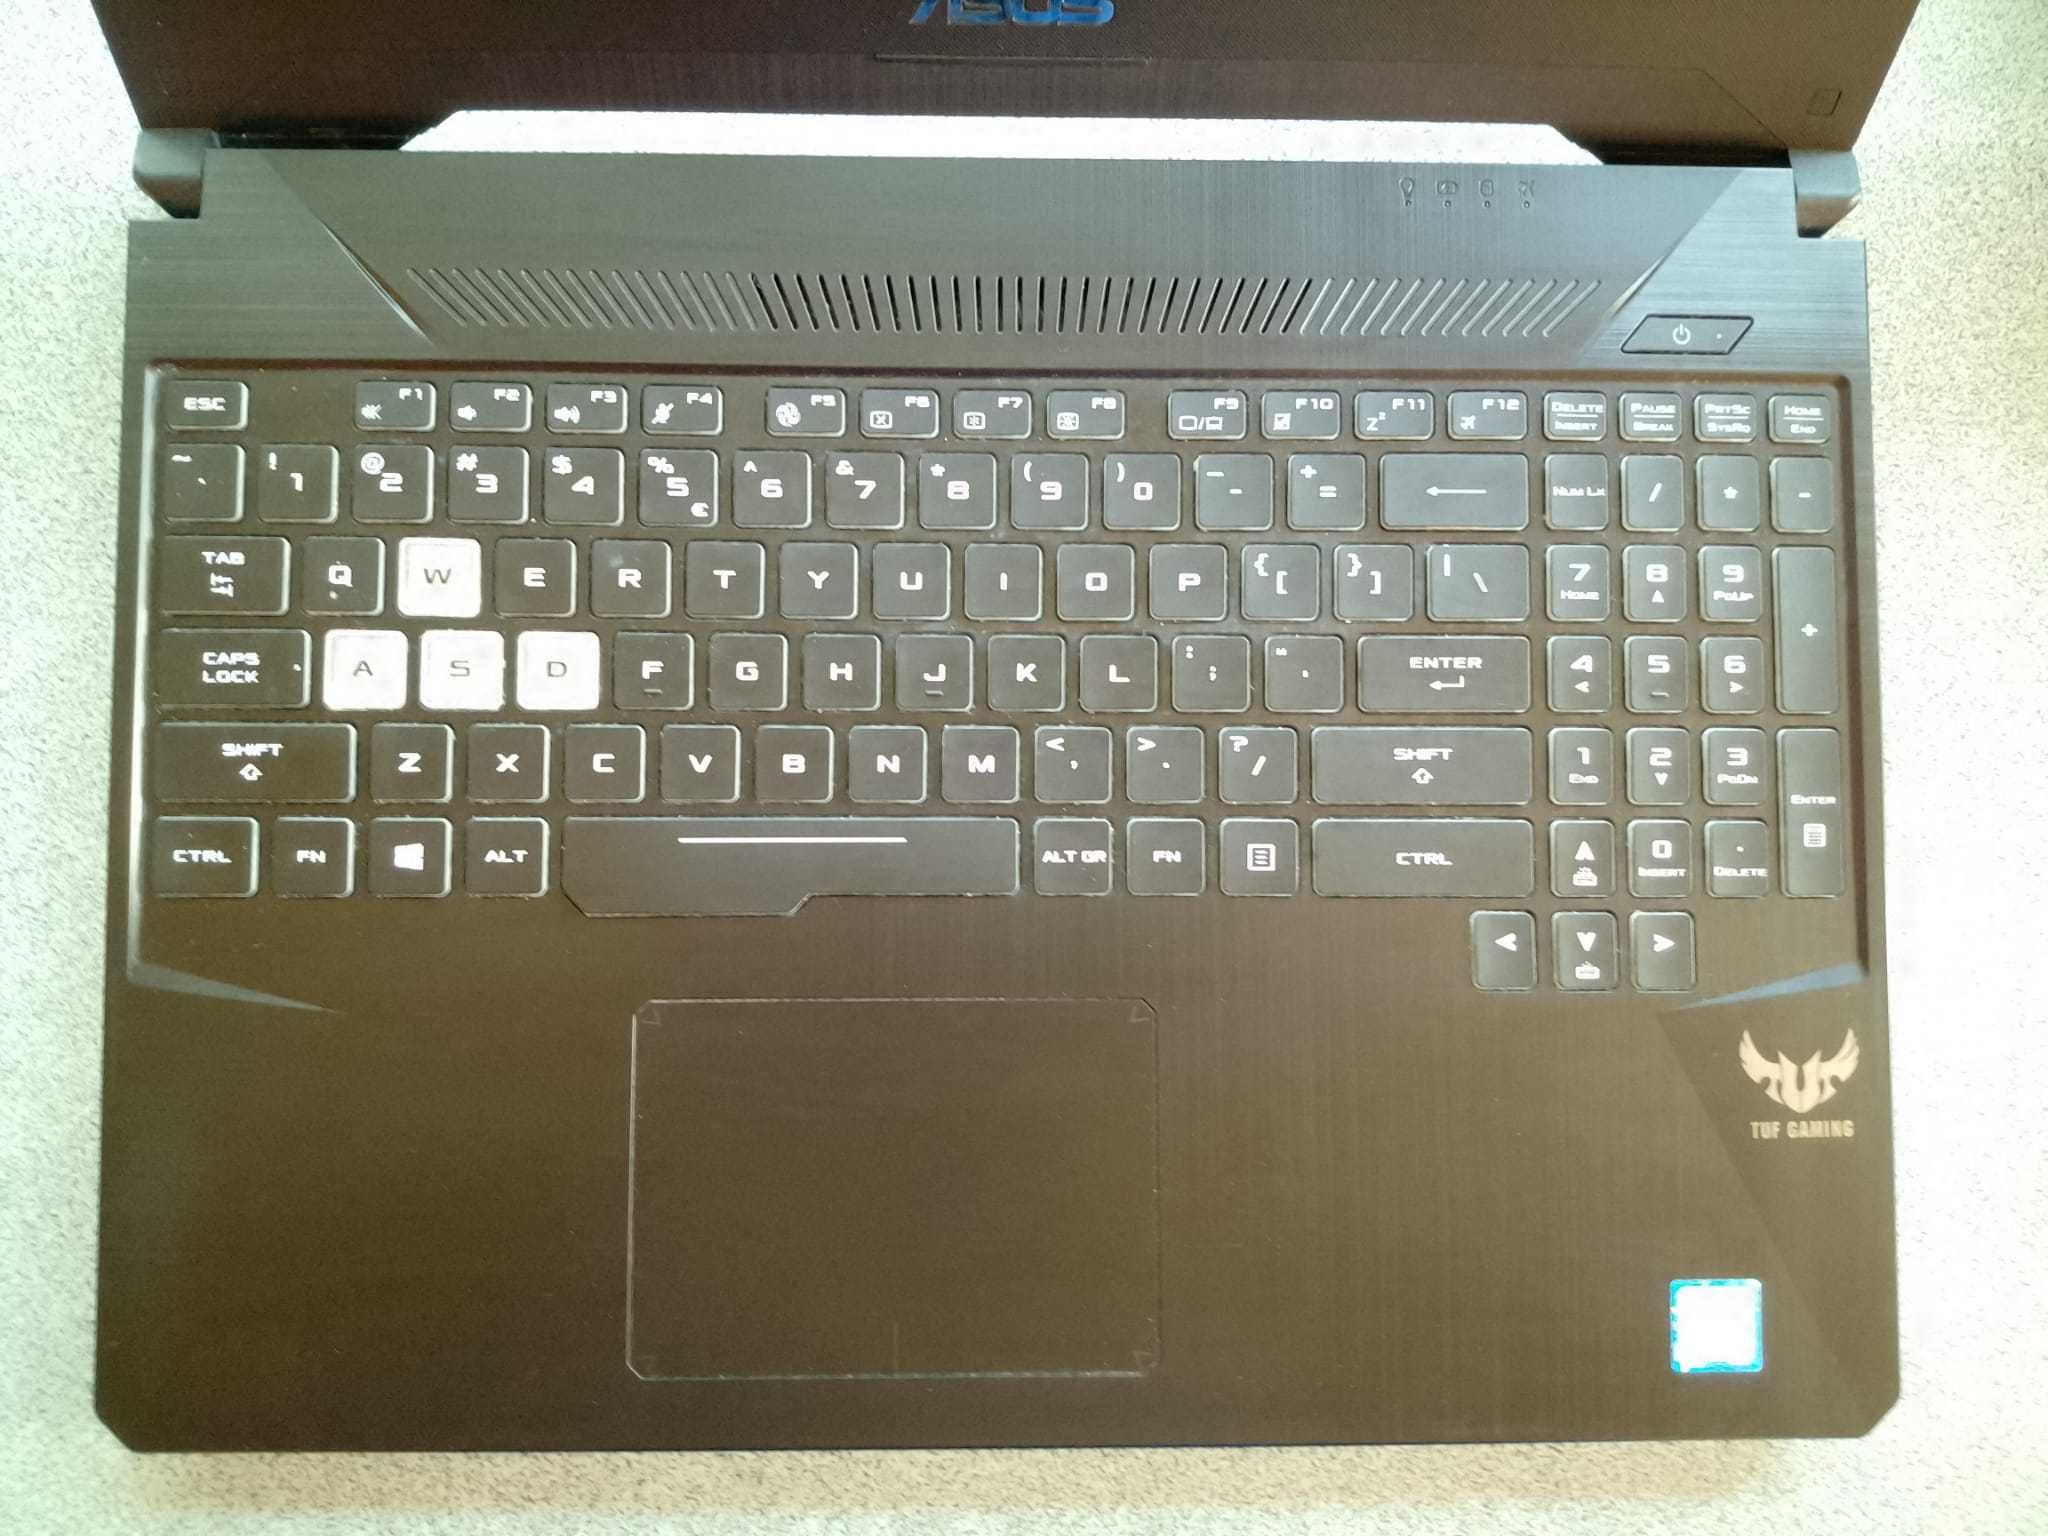 Laptop Gaming ASUS TUF FX505 GT, i7, 8Gb DDR4, GTX 1650, 15,6inch